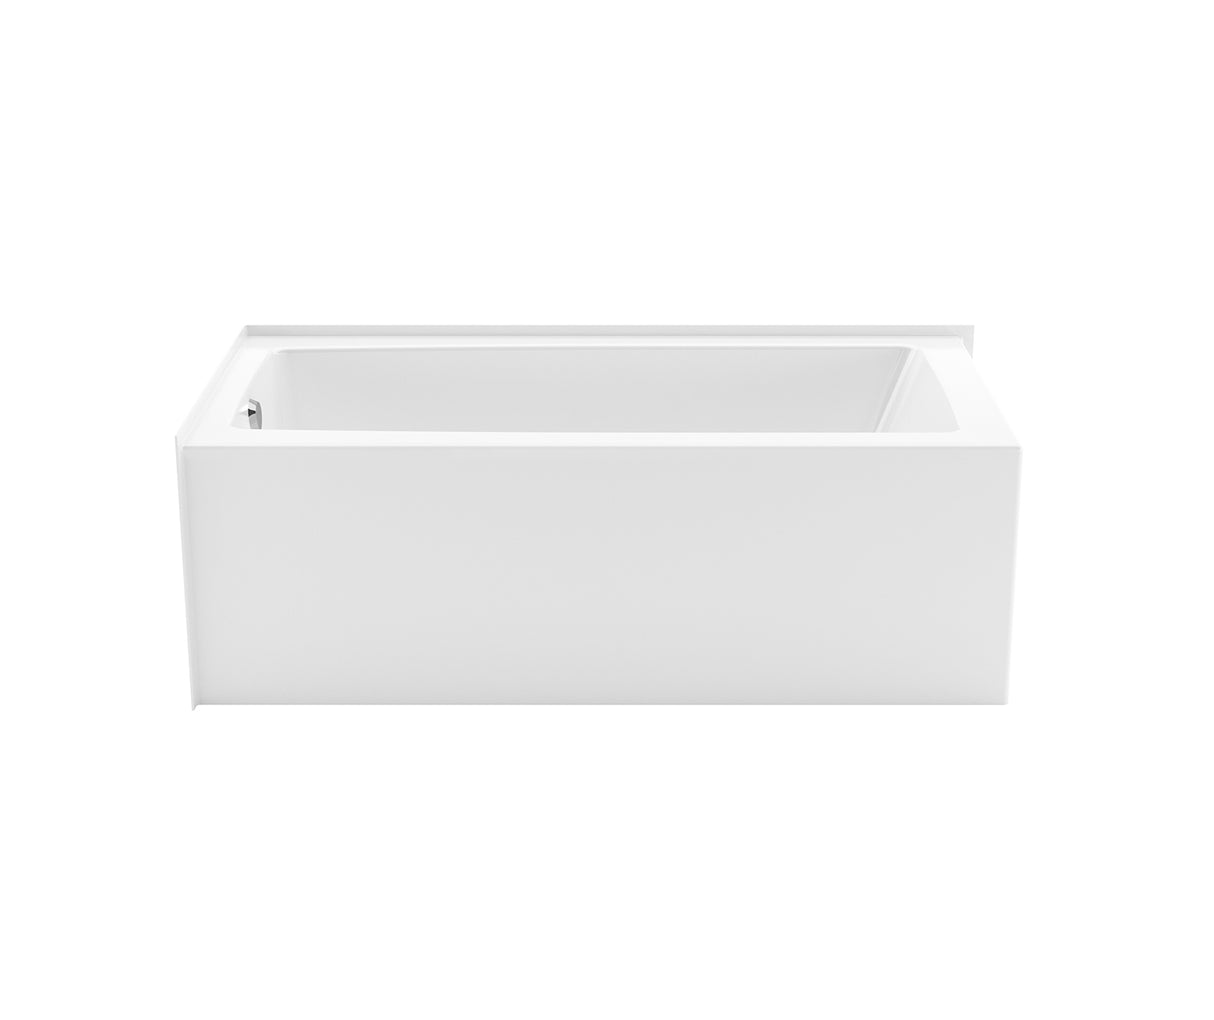 MAAX 106817-000-002-002 Nomad Corner 6030 AcrylX Corner Right-Hand Drain Bathtub in White